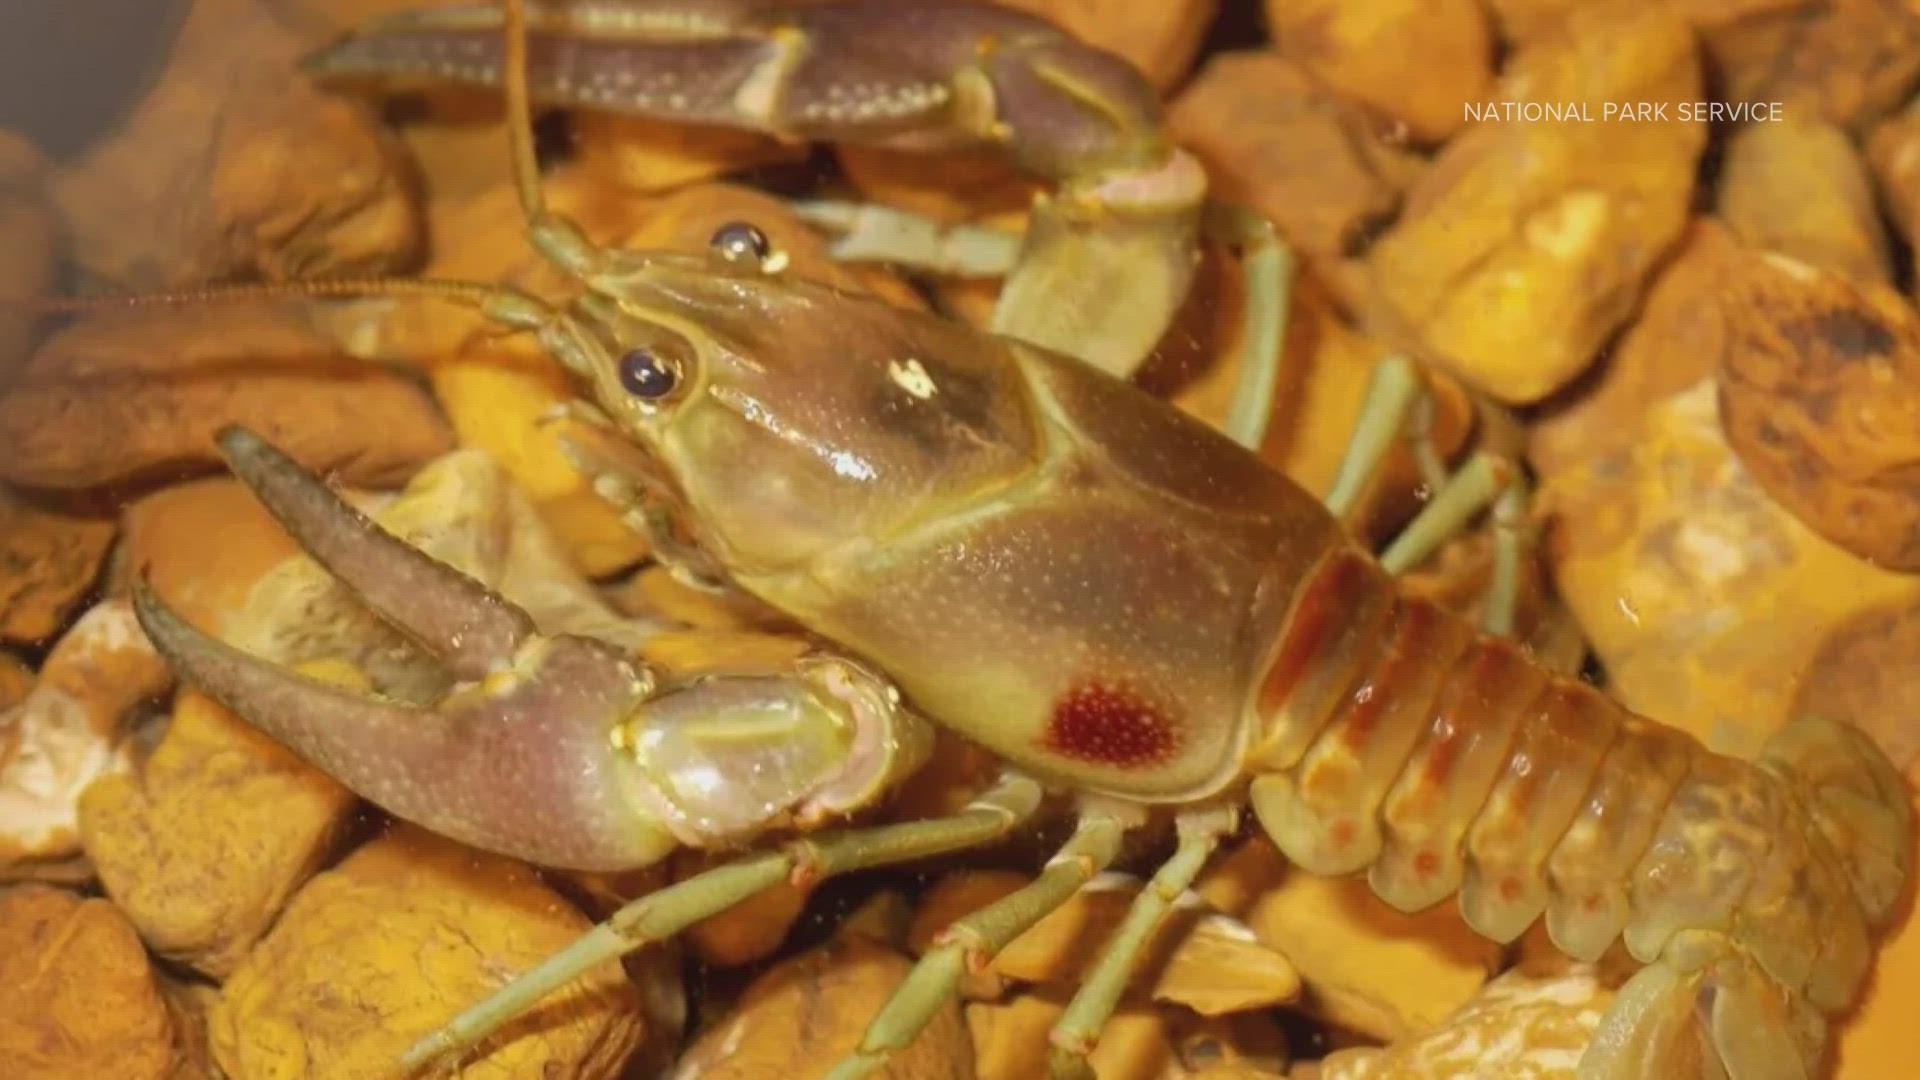 CPW said rusty crayfish, native to the Ohio River Basin, were found in Colorado's Lake Granby.